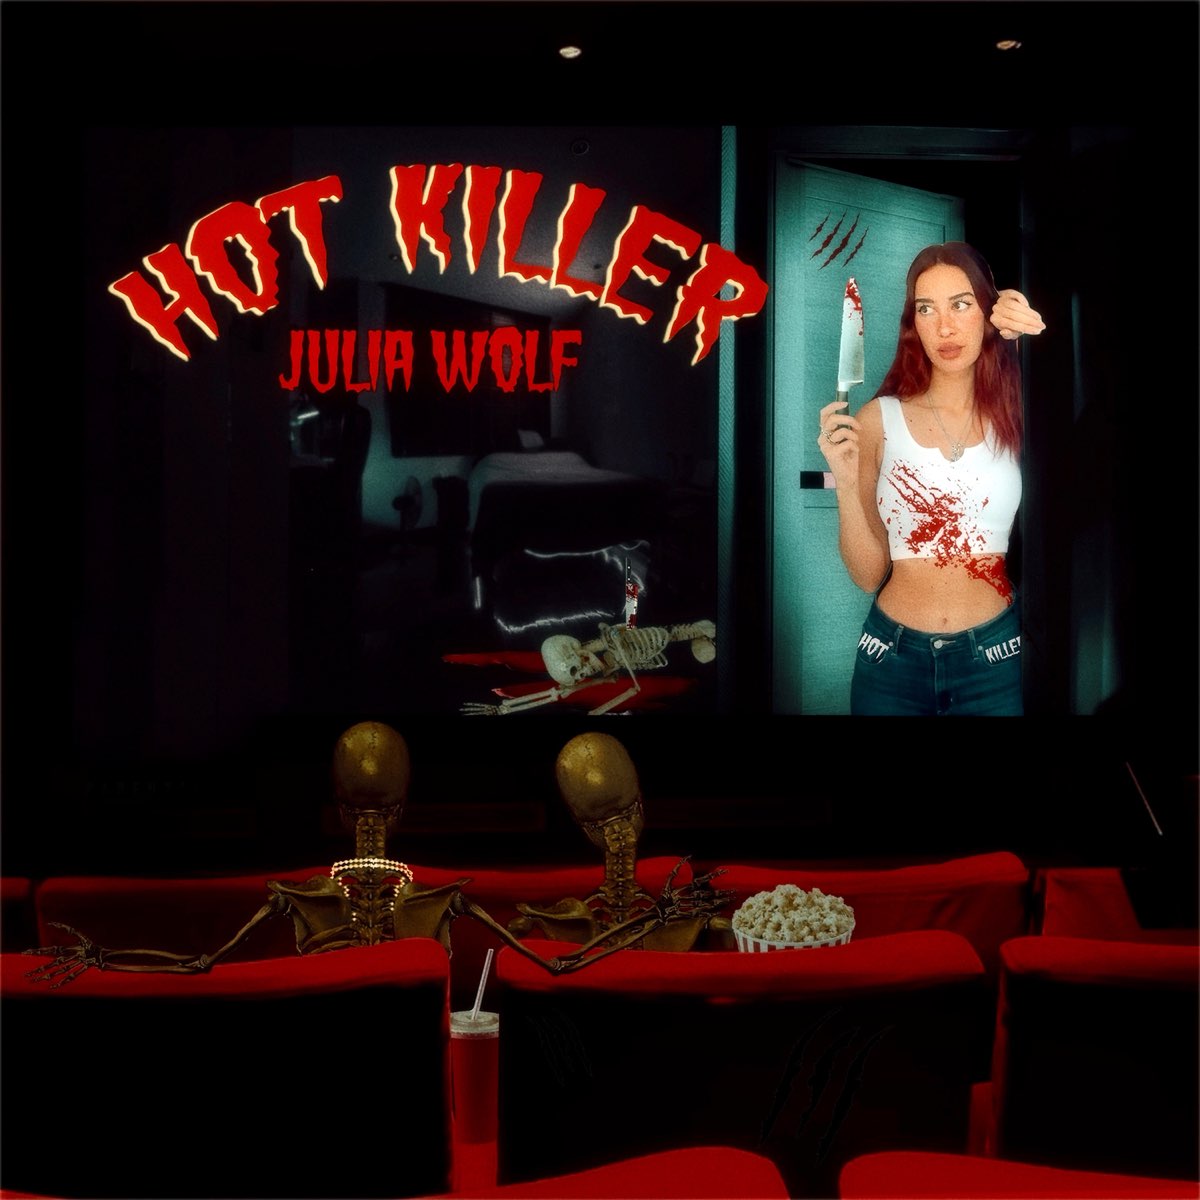 Julia wolf hot killer lyrics